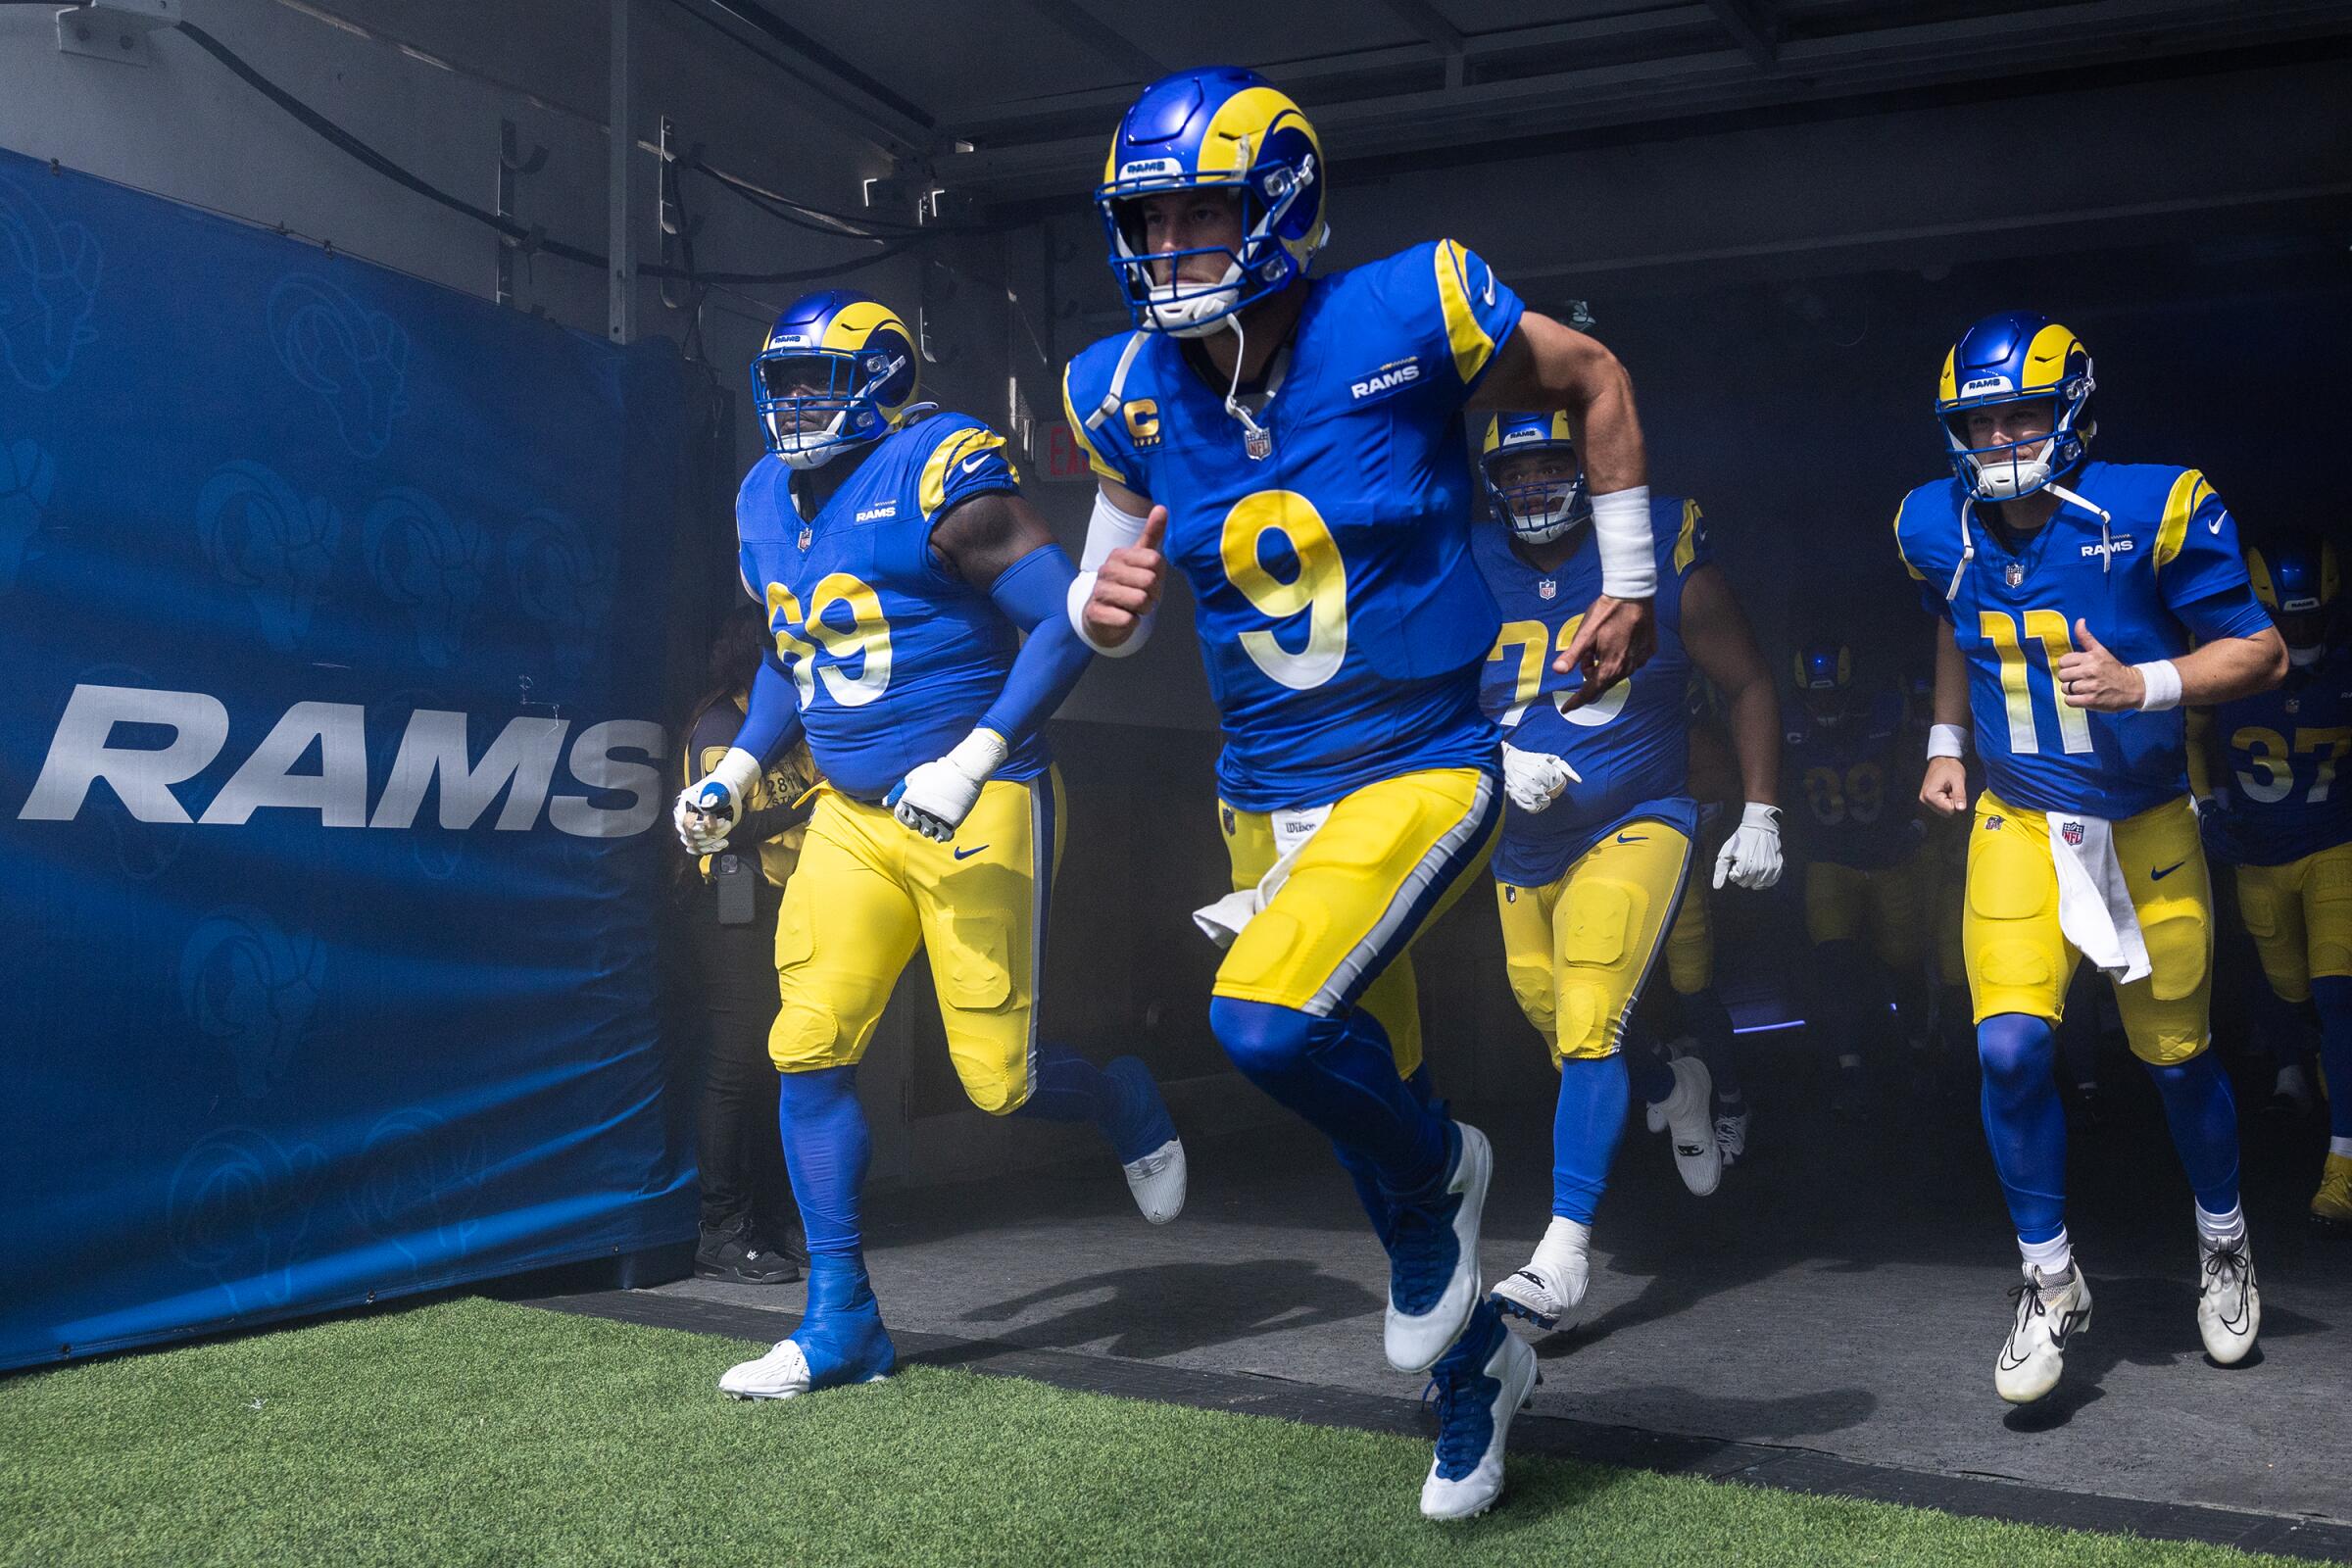 Rams uniform change likely